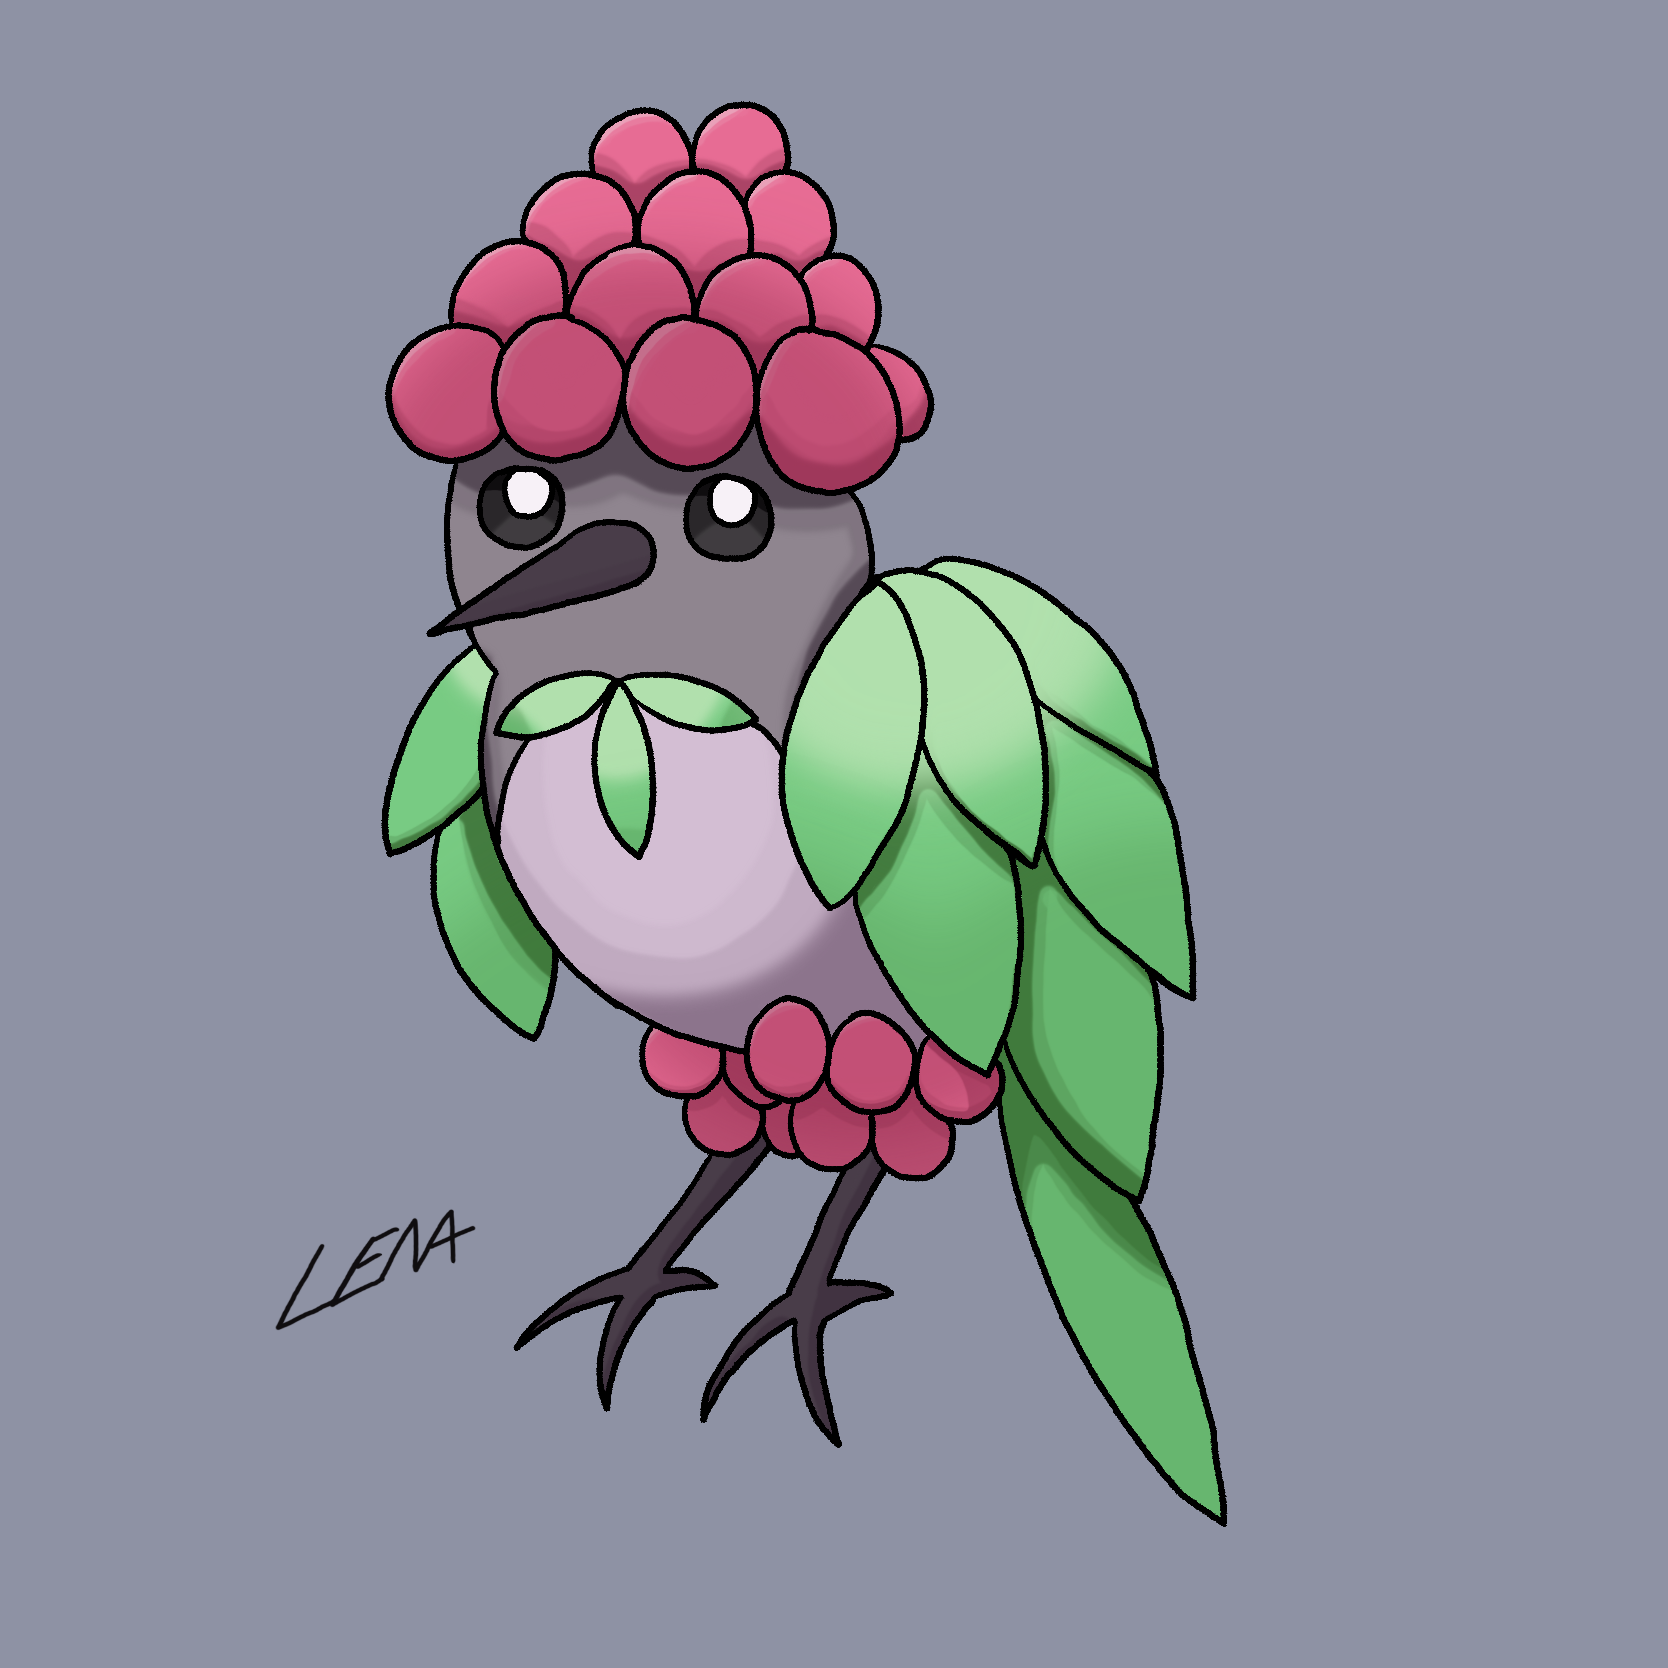 Malwaremon: Raspberry Robin